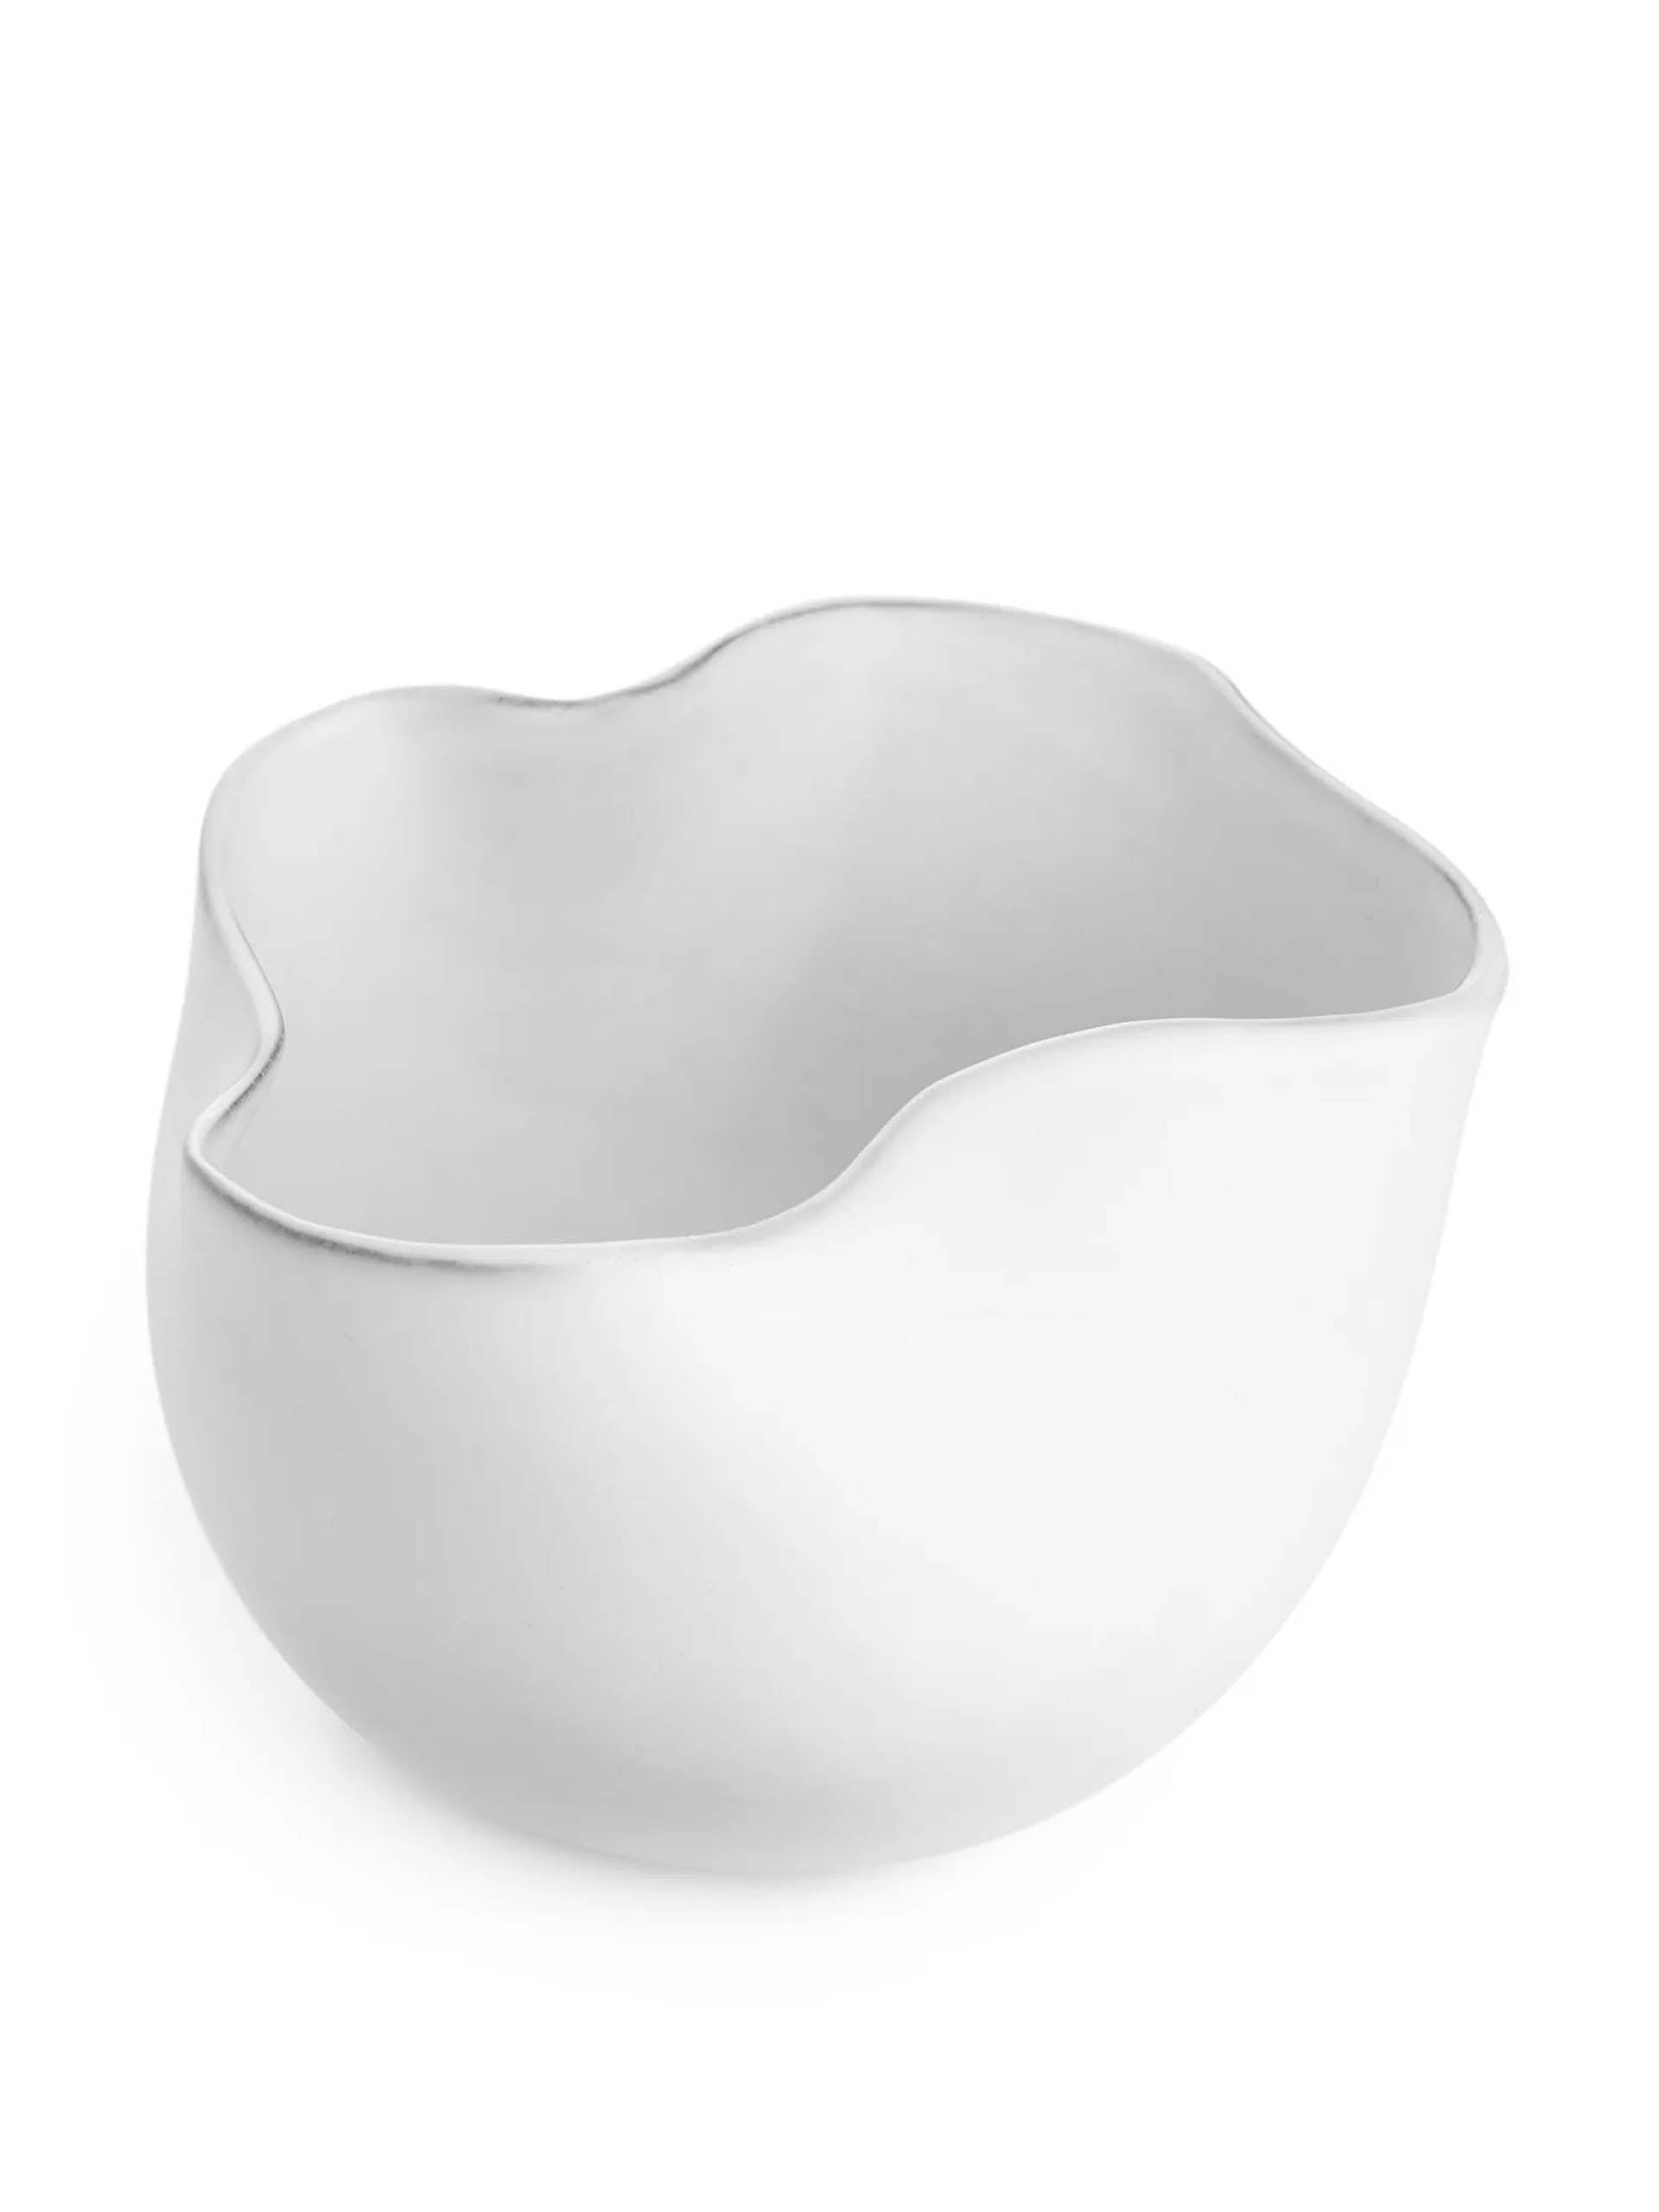 White terracotta bowl